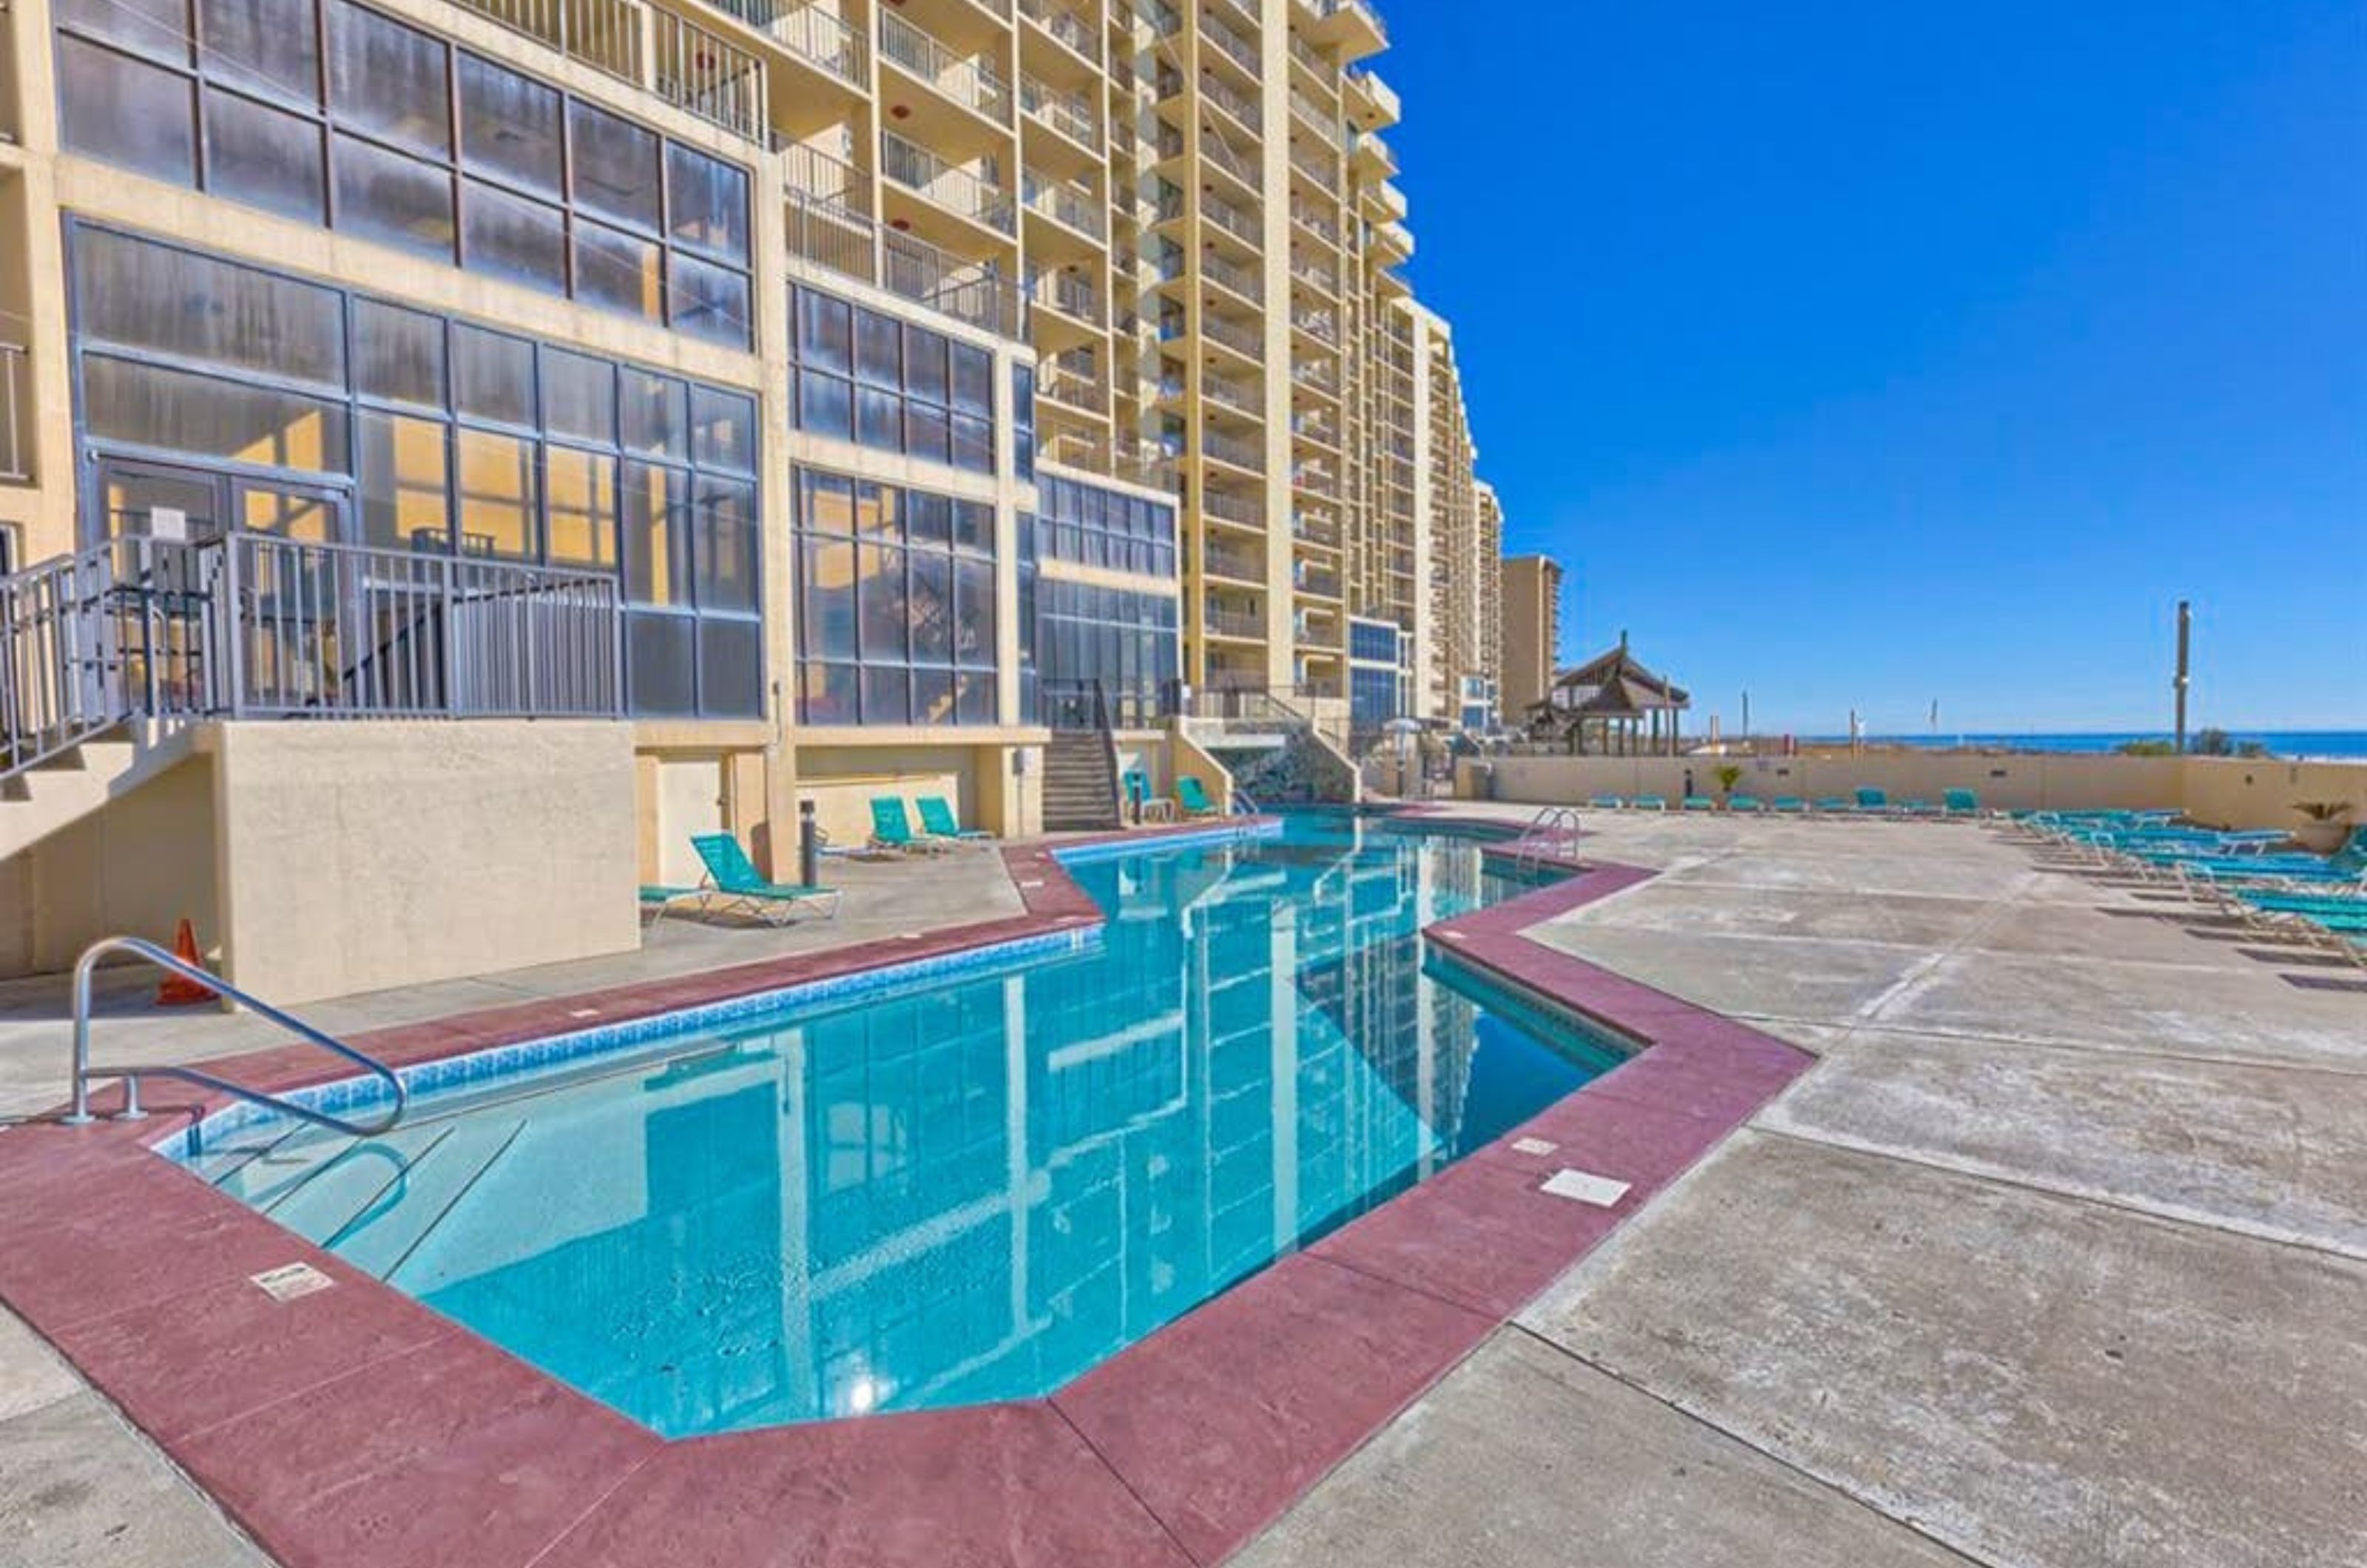 The outdoor pool in front of Phoenix I condominiums in Orange Beach Alabama